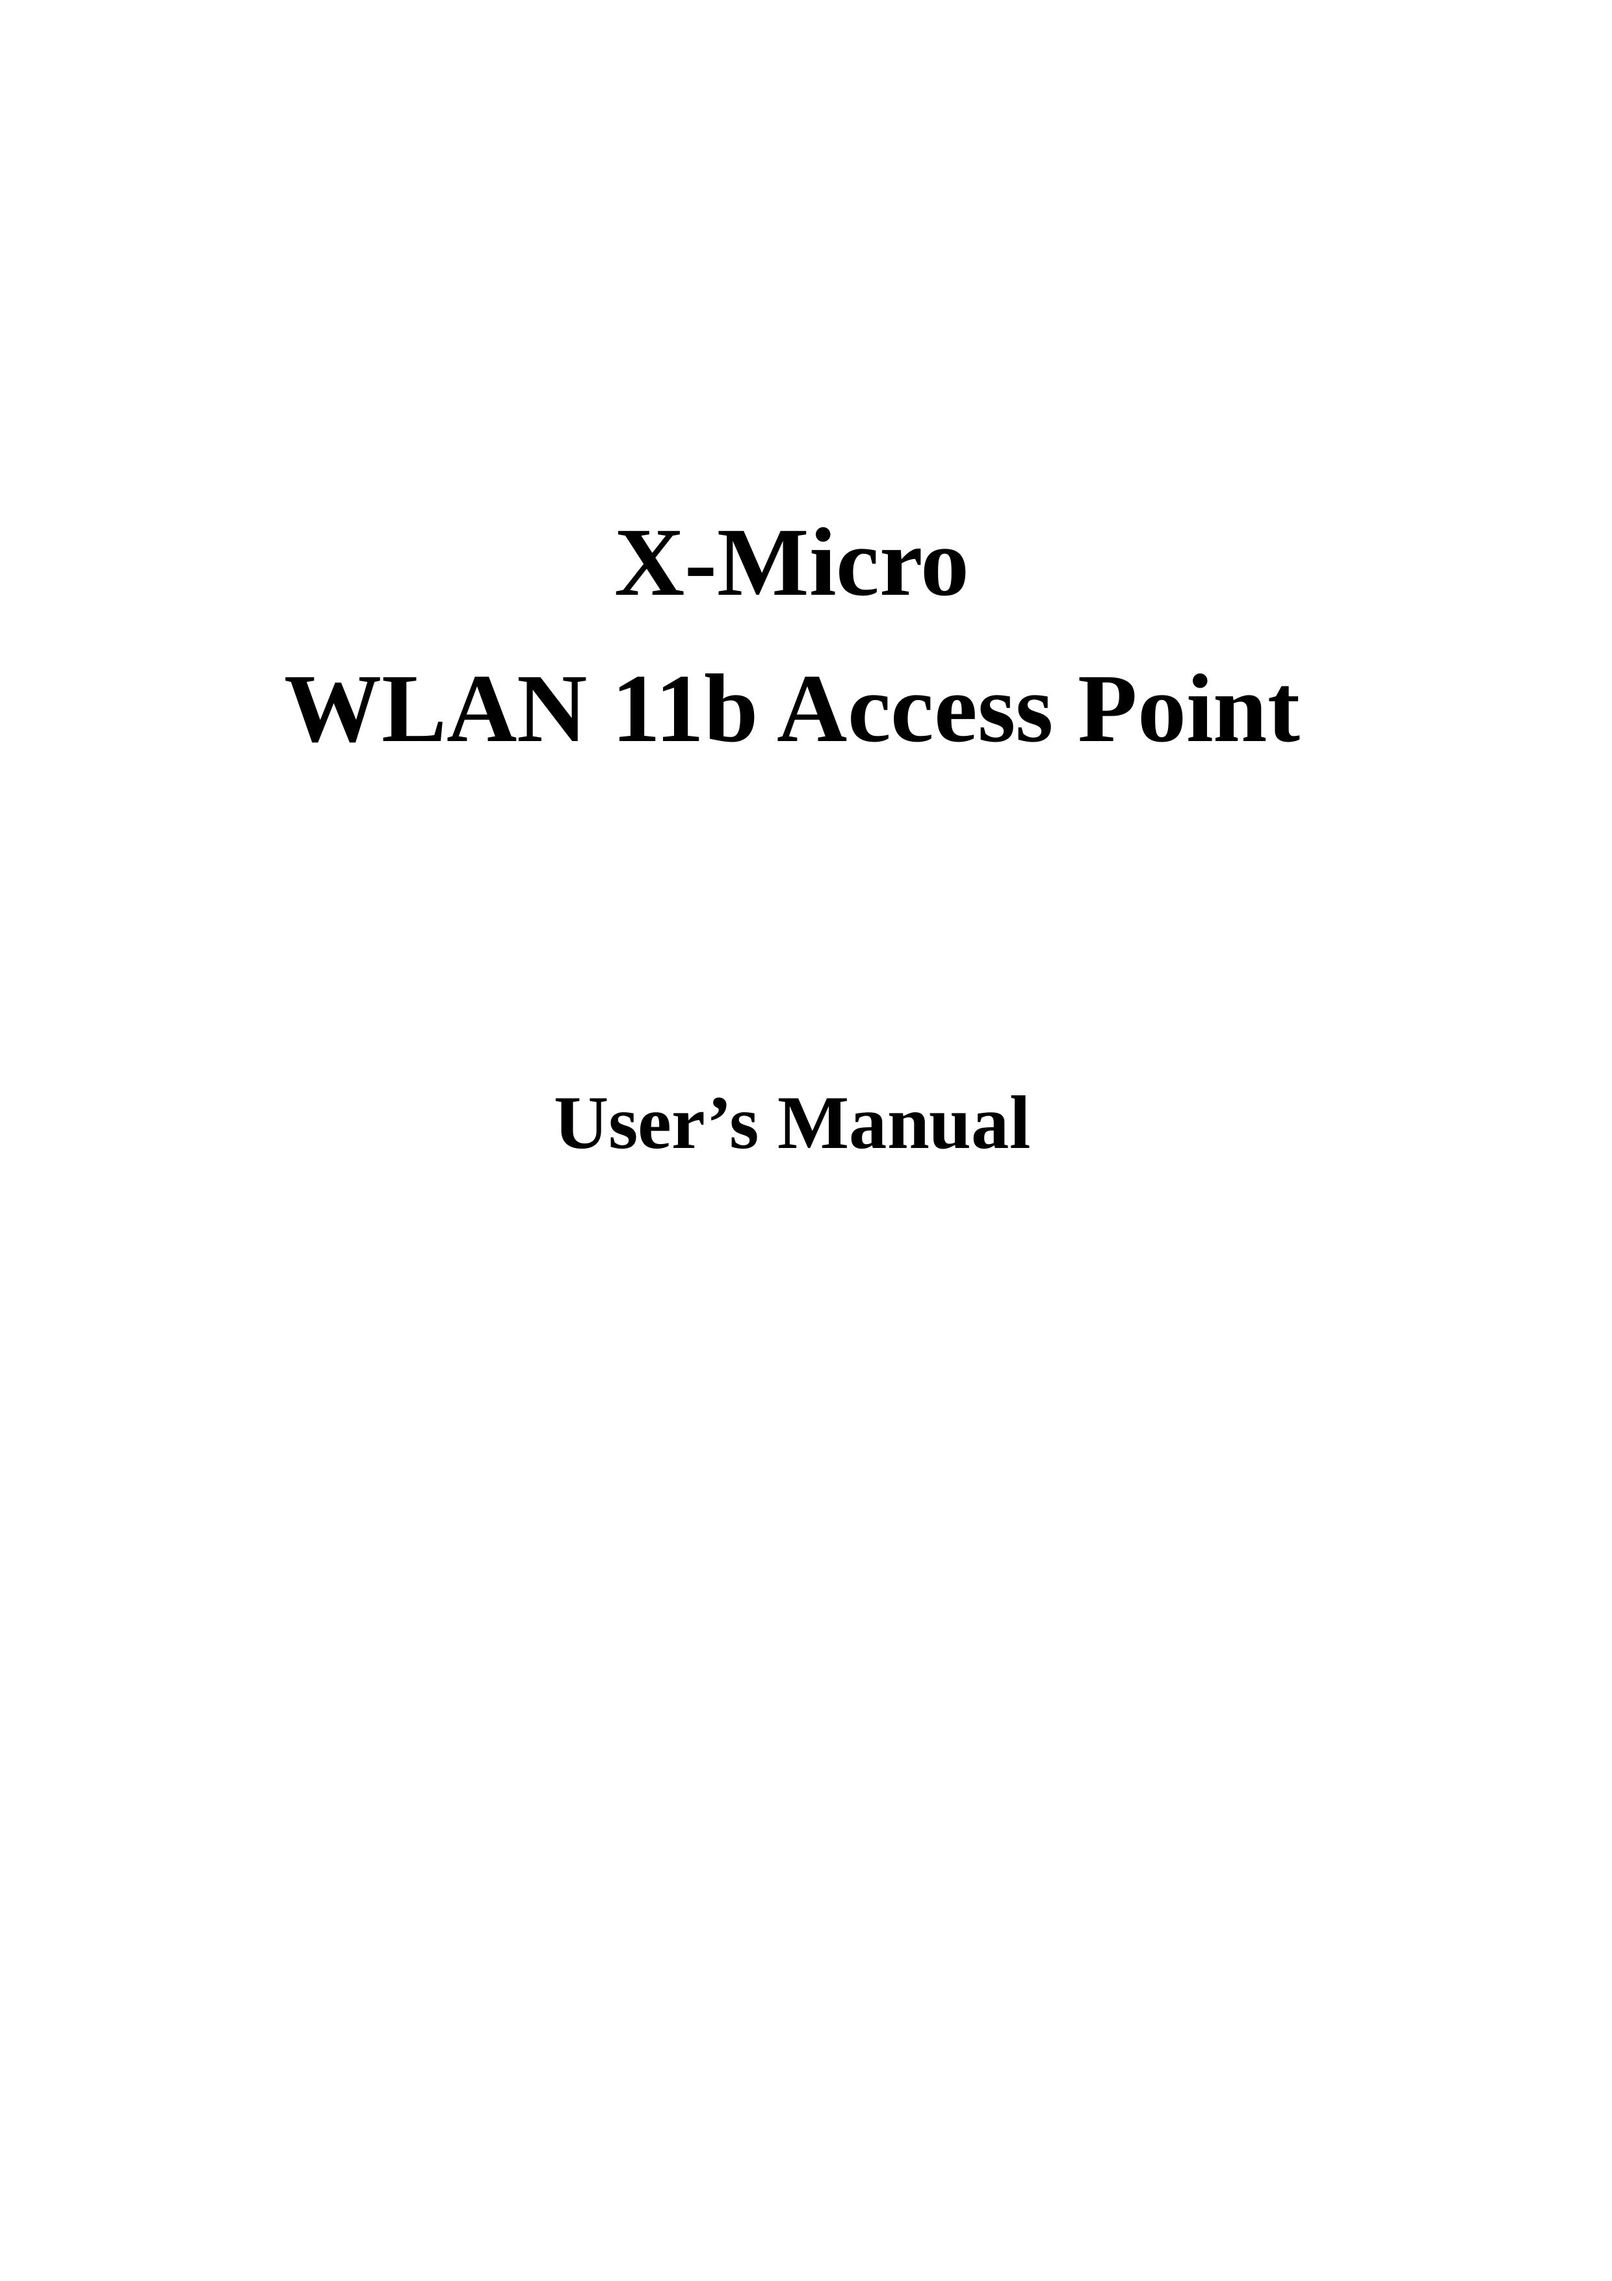 X-Micro Tech. WLAN 11b Access Point Network Router User Manual